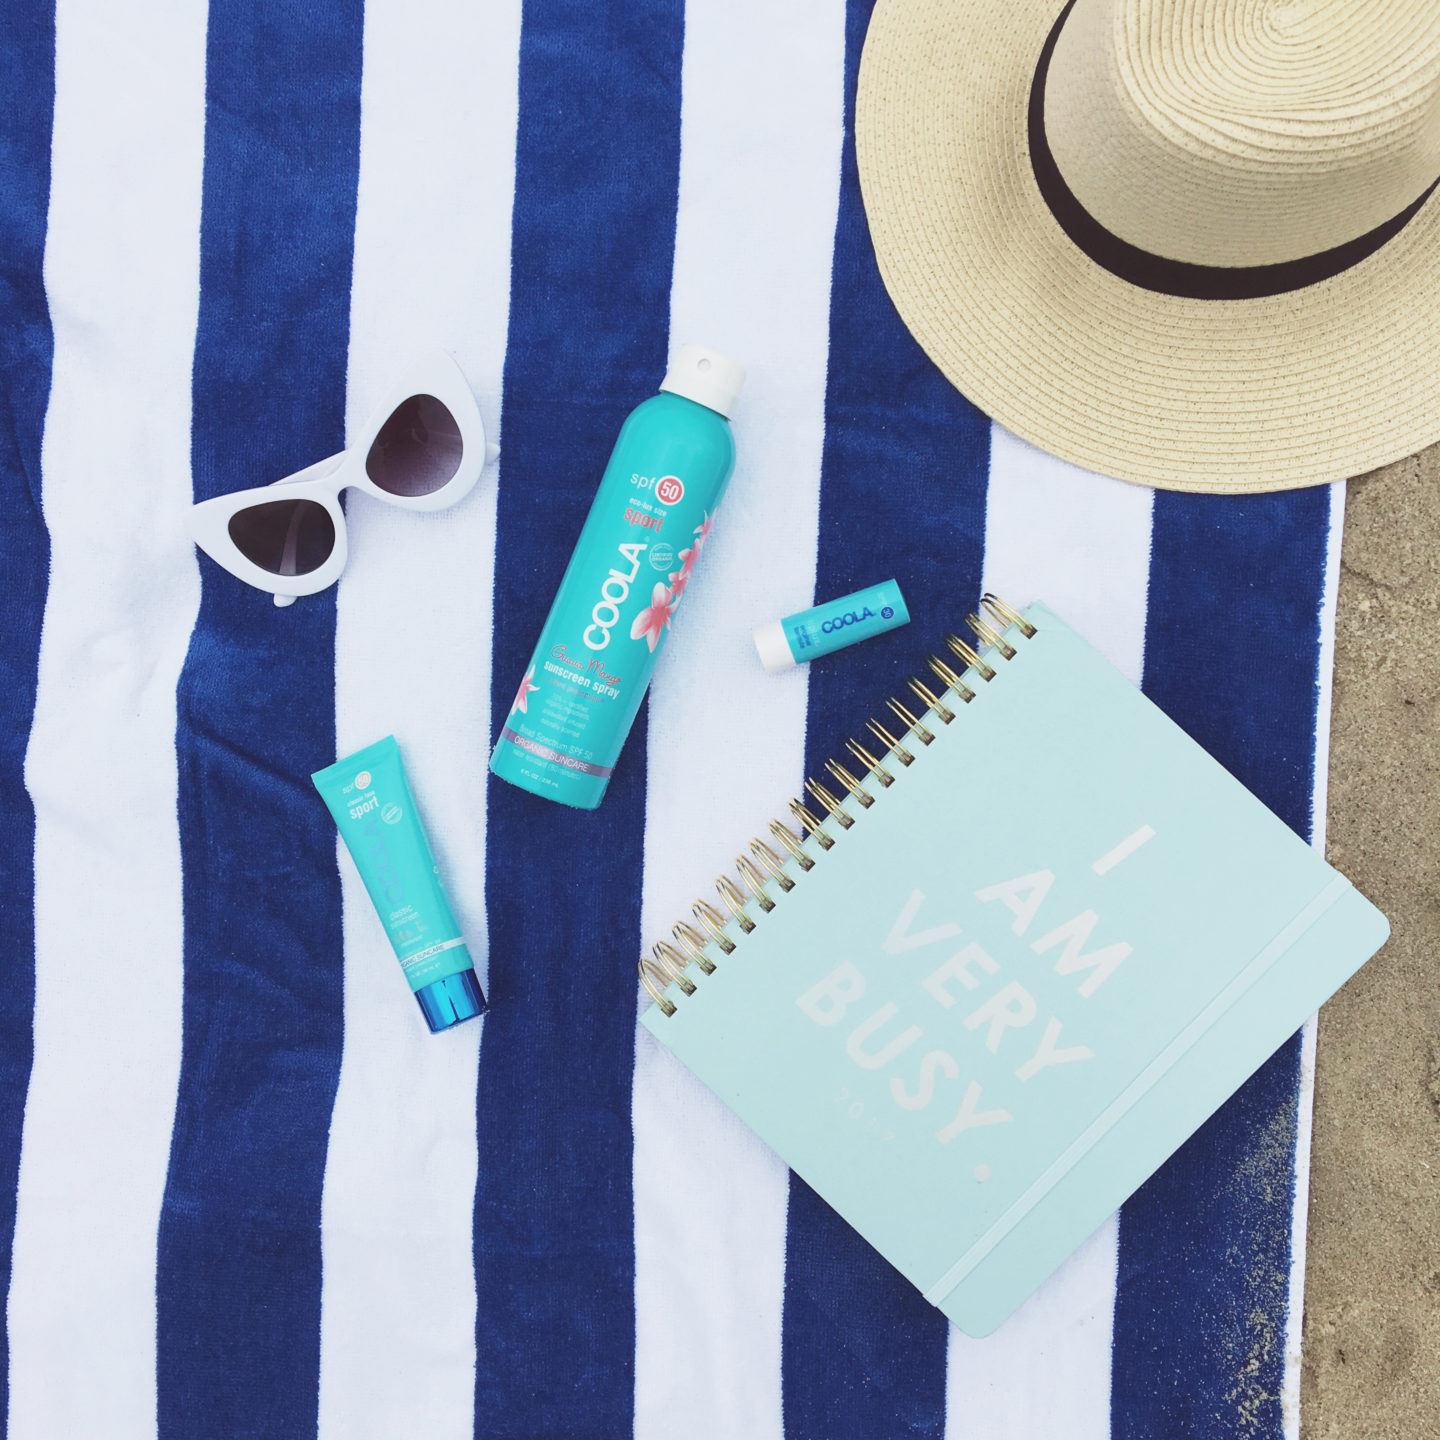 coola-sunscreen-beach-blogger